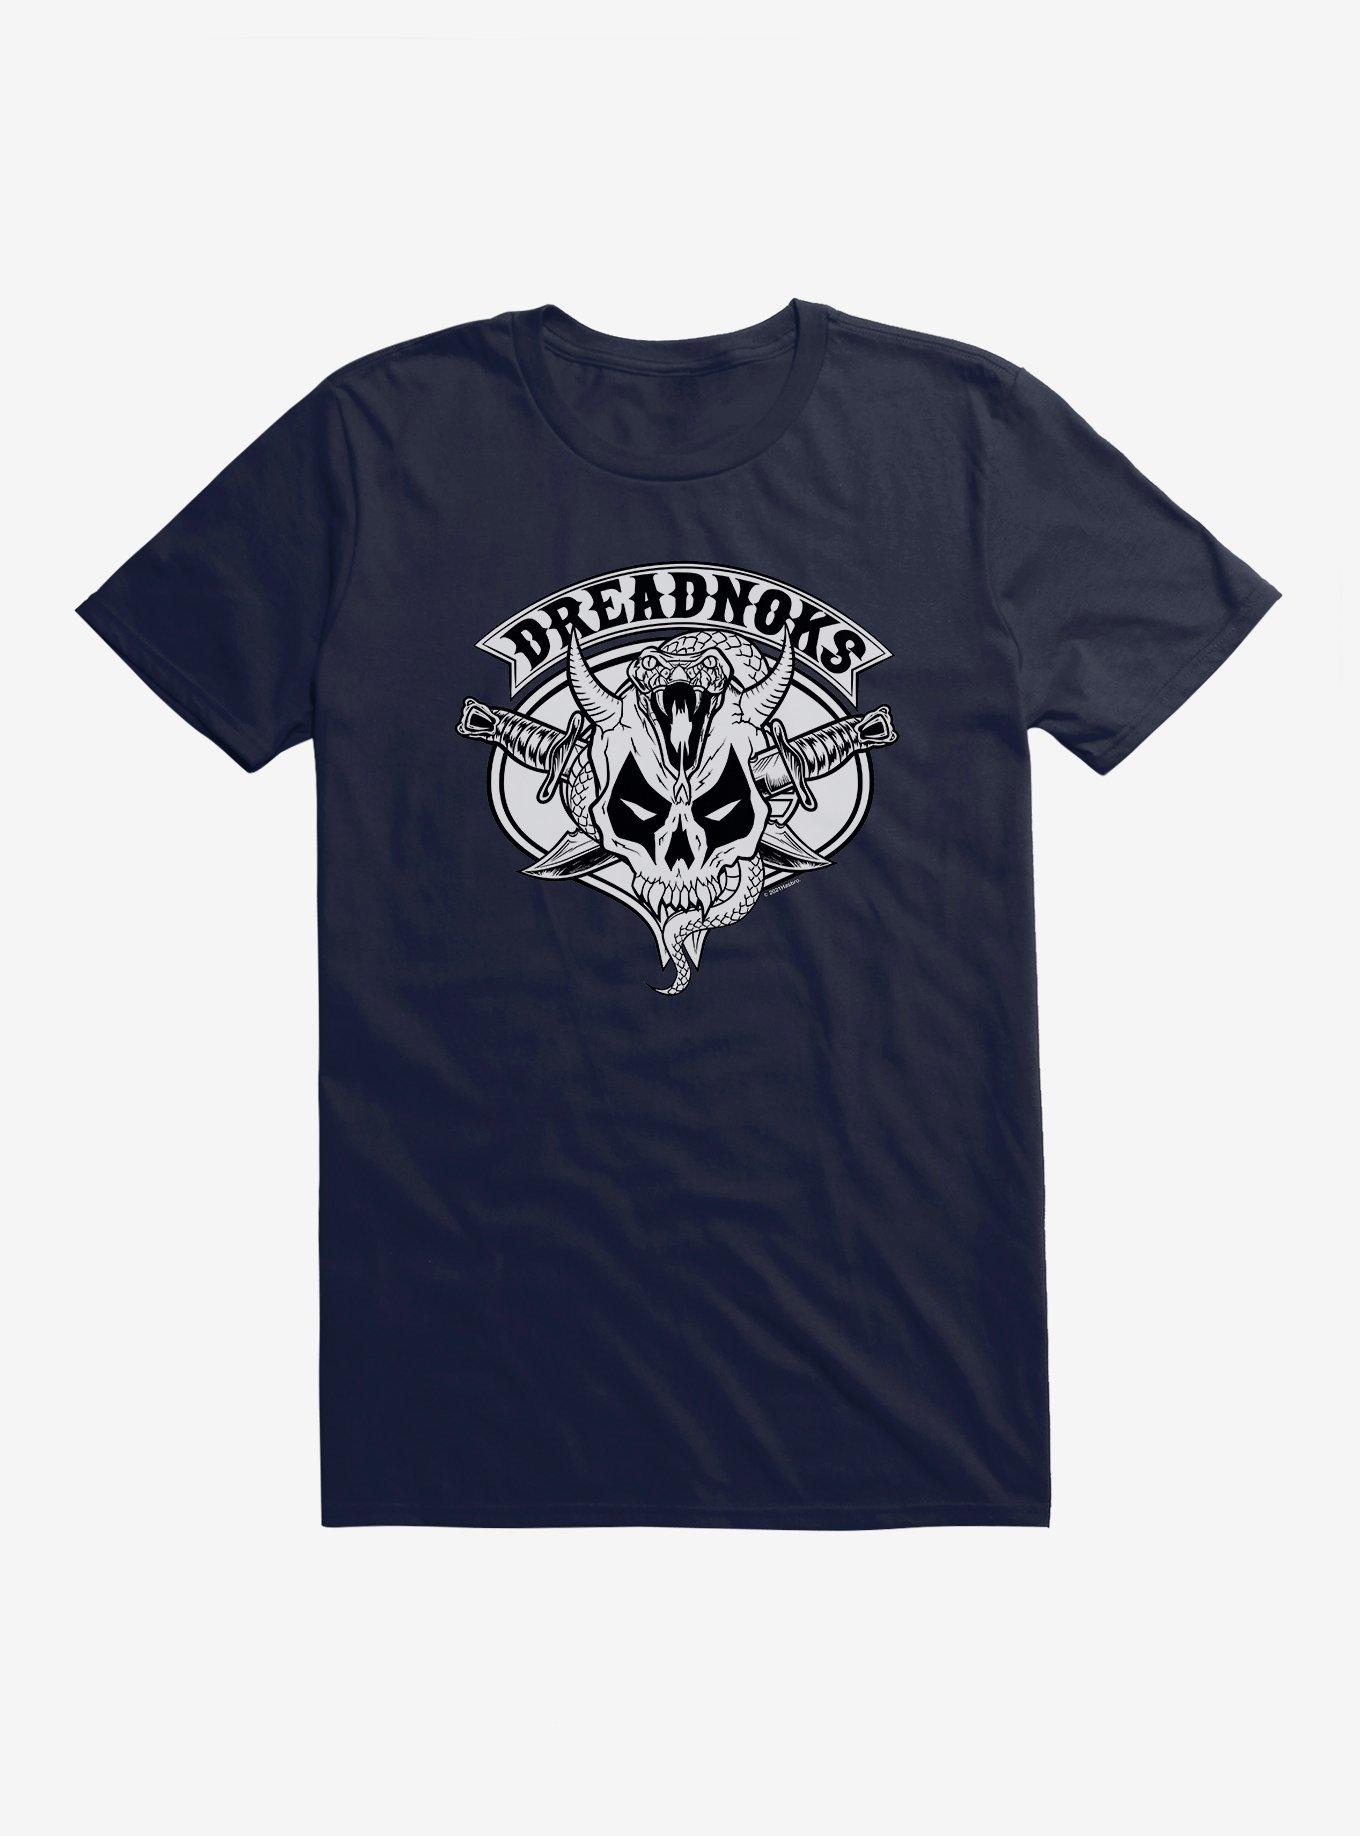 G.I. Joe Dreadnoks Logo T-Shirt | Hot Topic